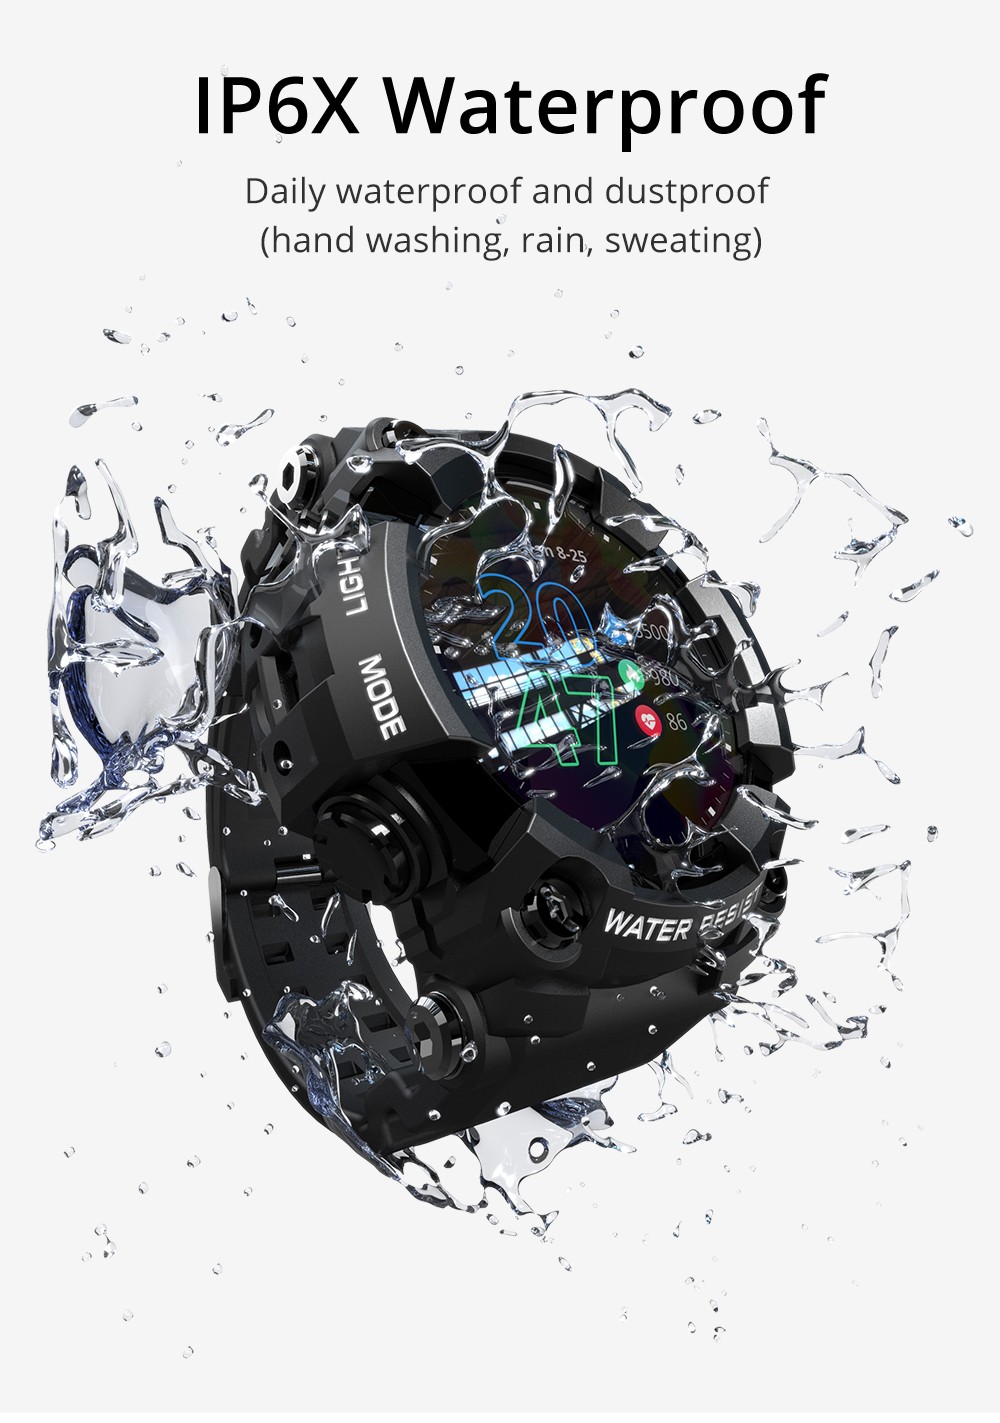 LOKMAT ATTACK Bluetooth Smartwatch 1.28 inch TFT Touch Screen رصد معدل ضربات القلب وضغط الدم IP68 مقاومة للماء لمدة 25 يومًا وقت الانتظار - أسود